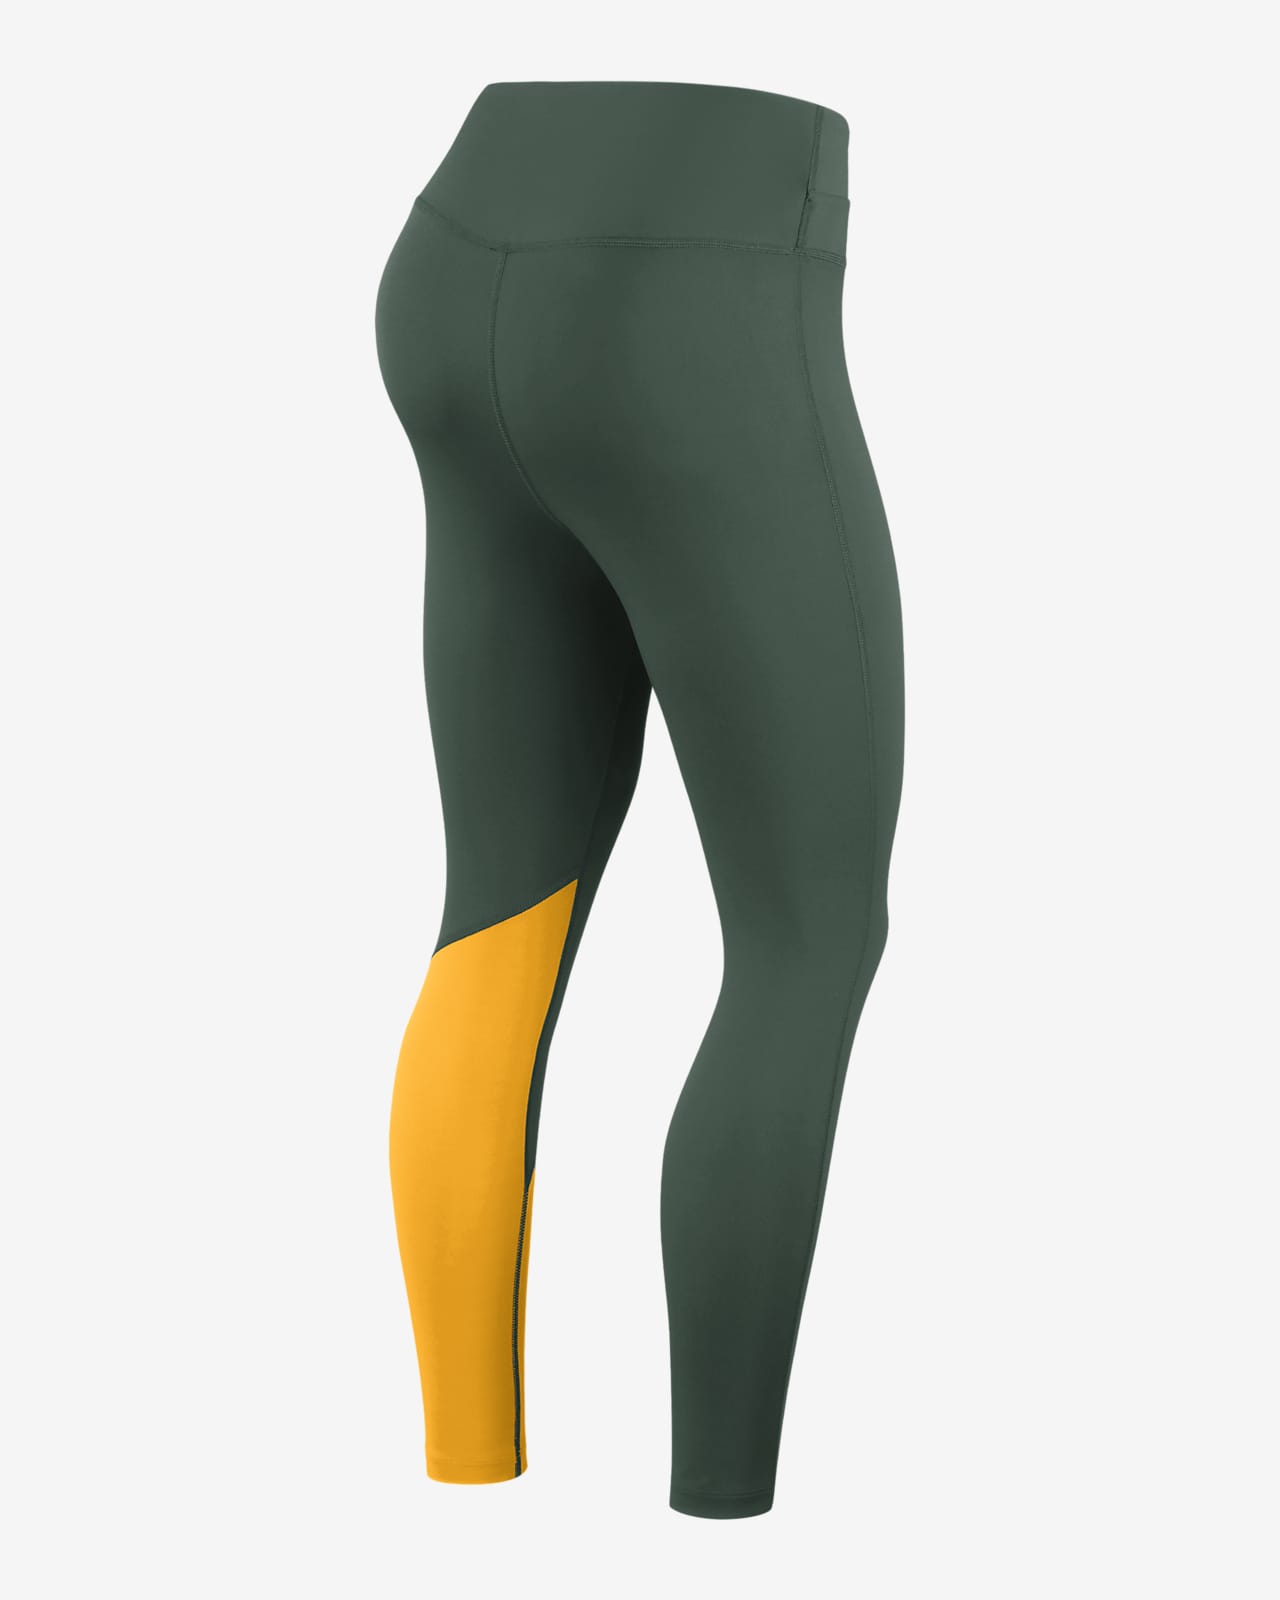 Nike Dri-FIT (NFL Green Bay Packers) Women's 7/8 Leggings.